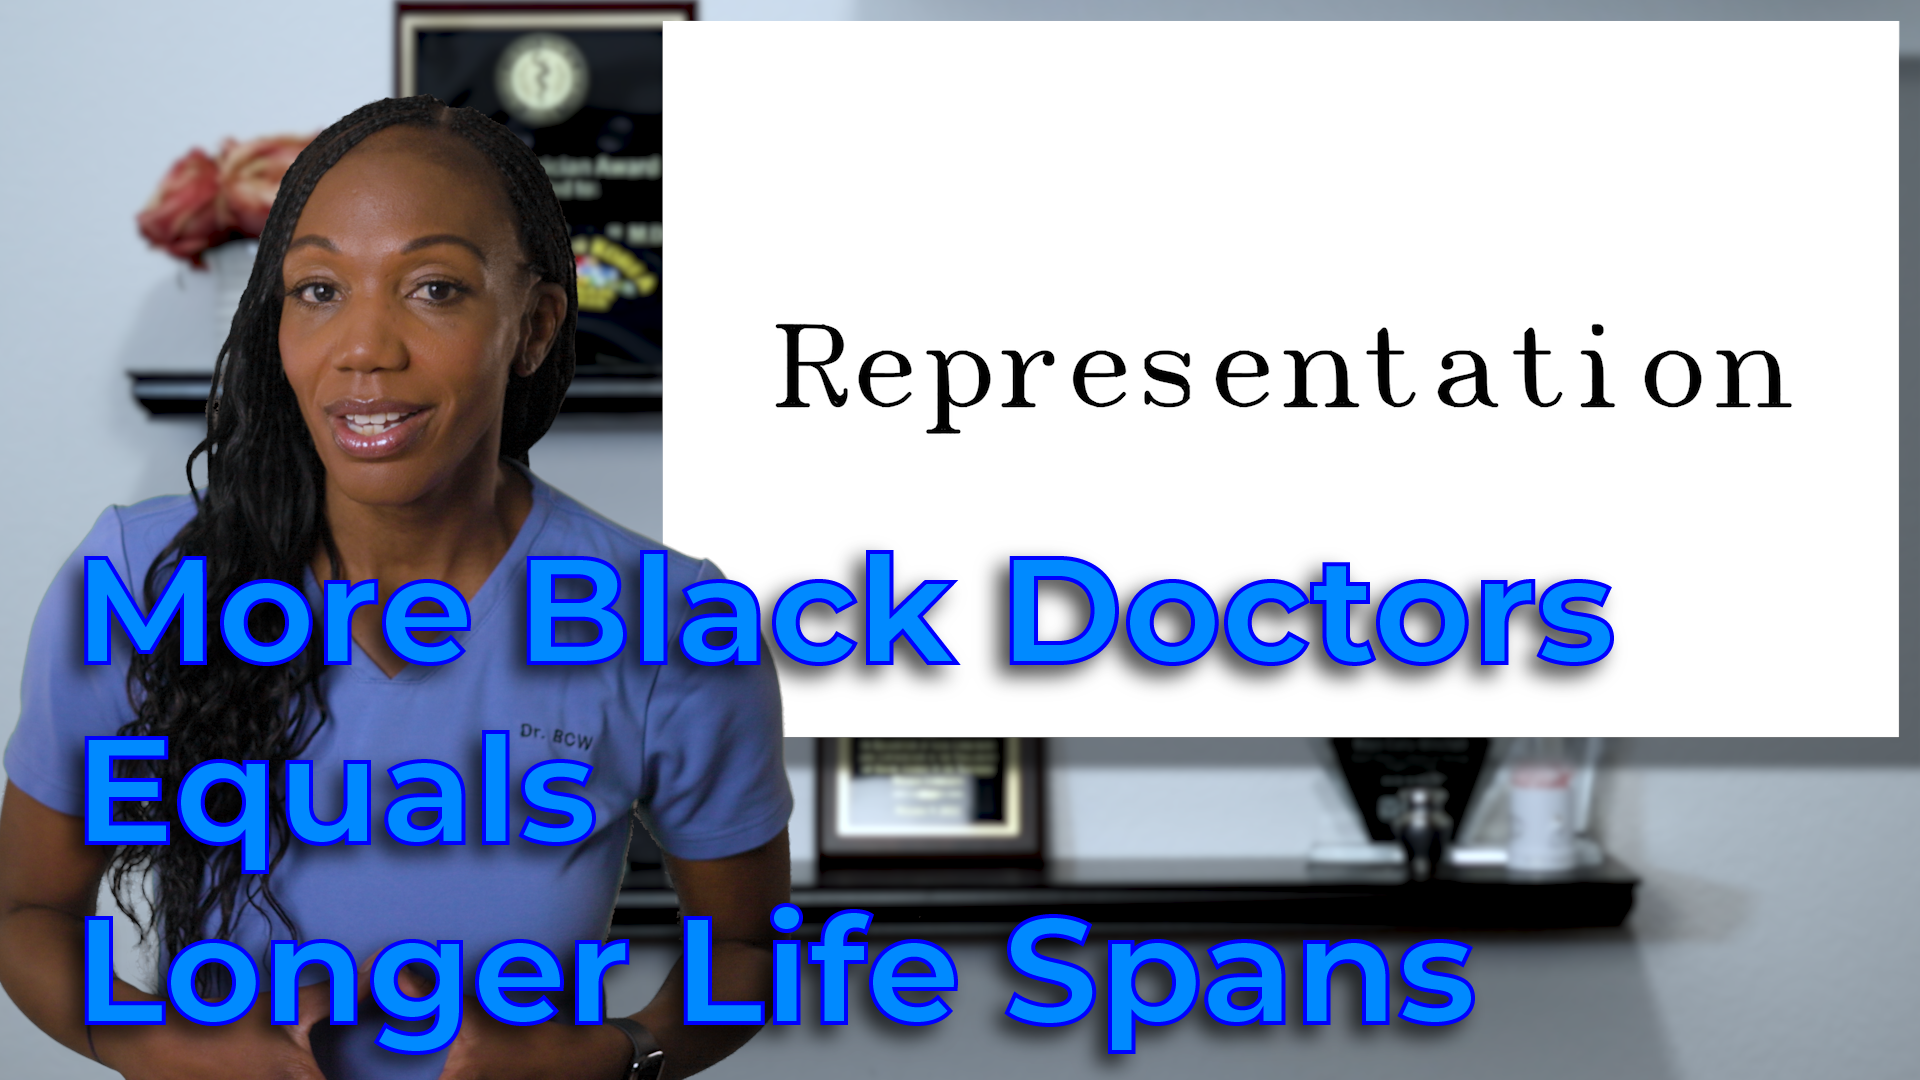 More Black Doctors, Longer Life Spans